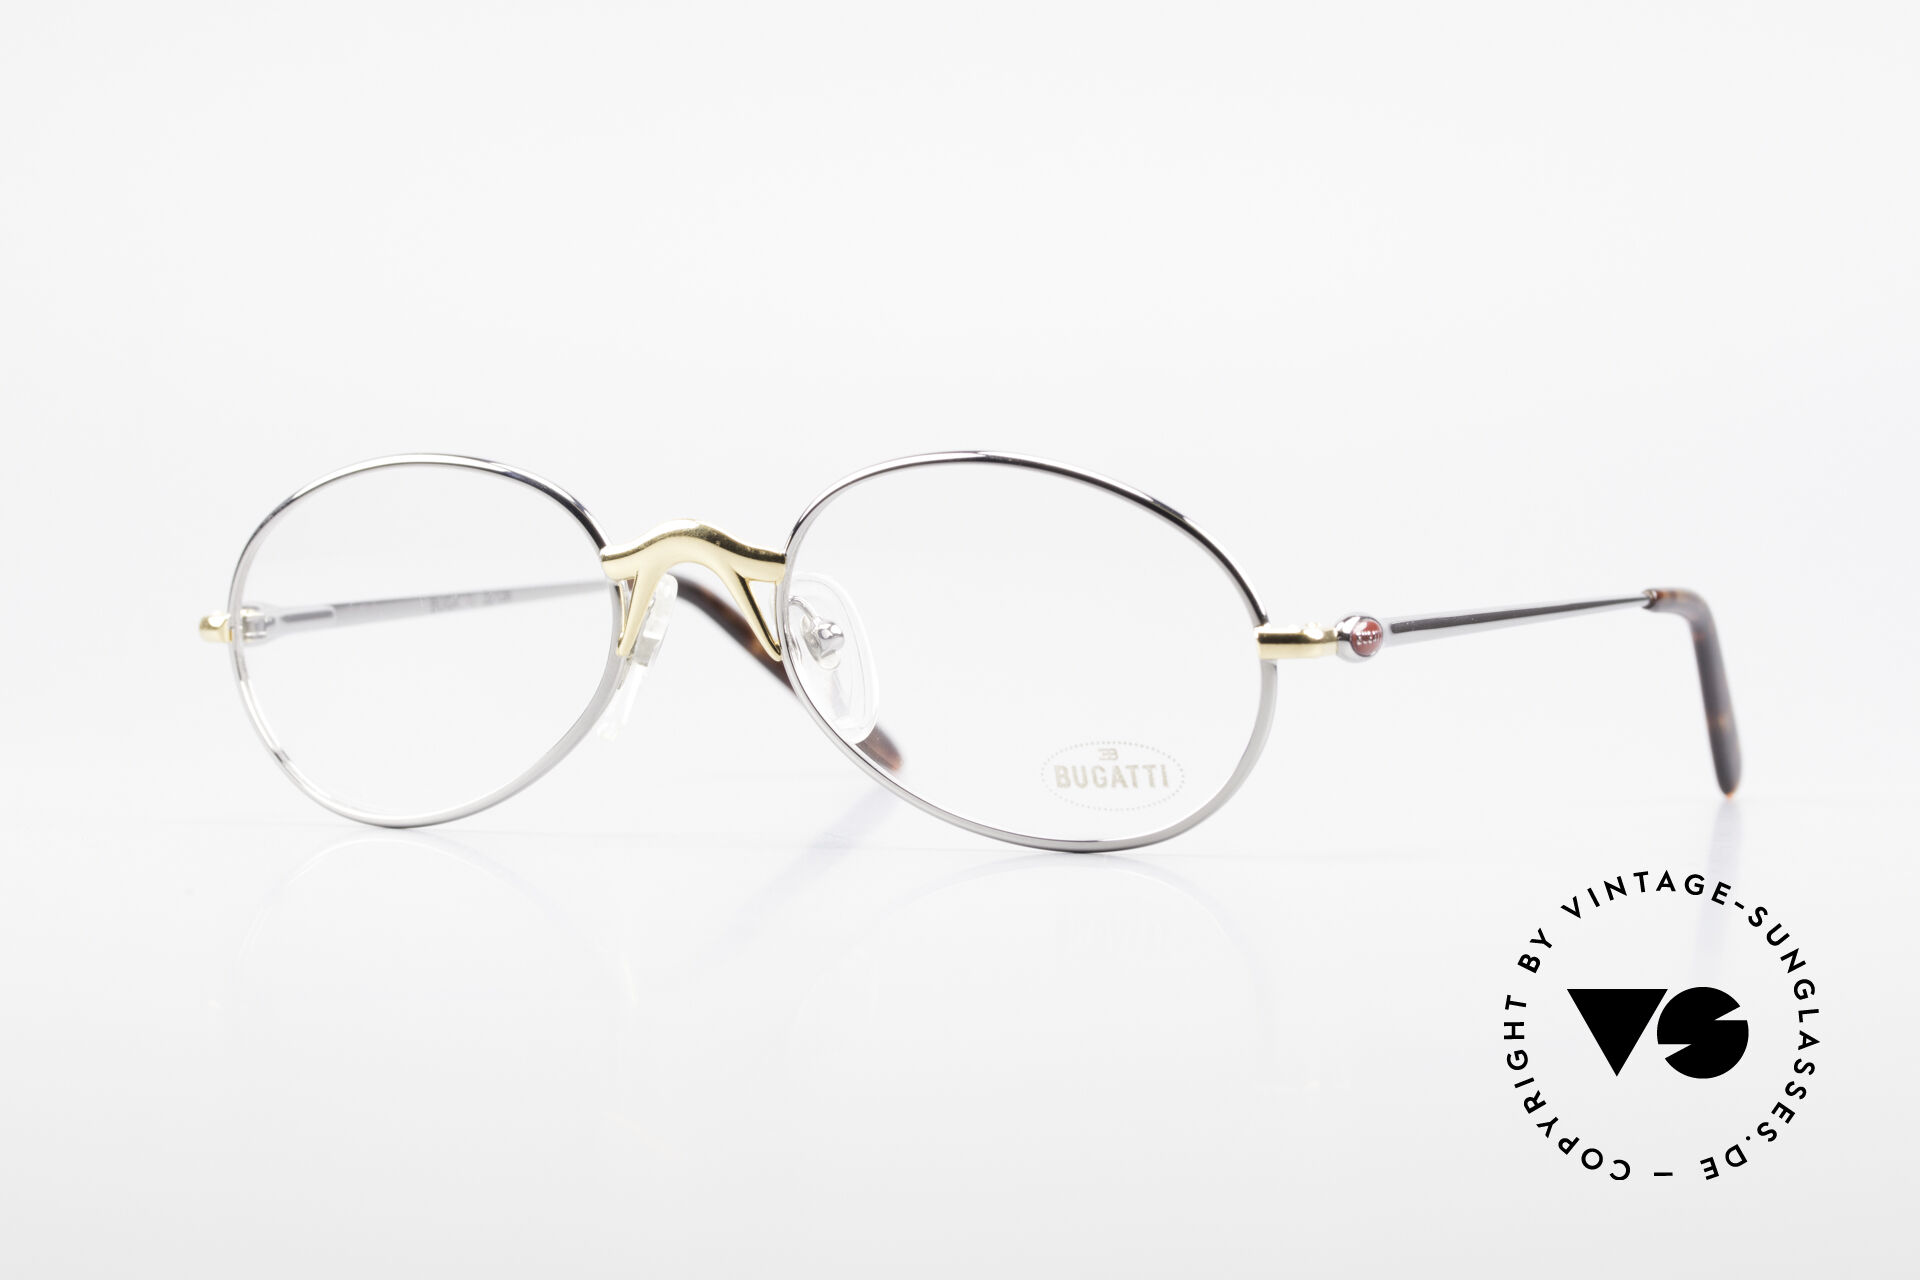 Glasses Bugatti 22126 Rare Oval 90's Vintage Glasses